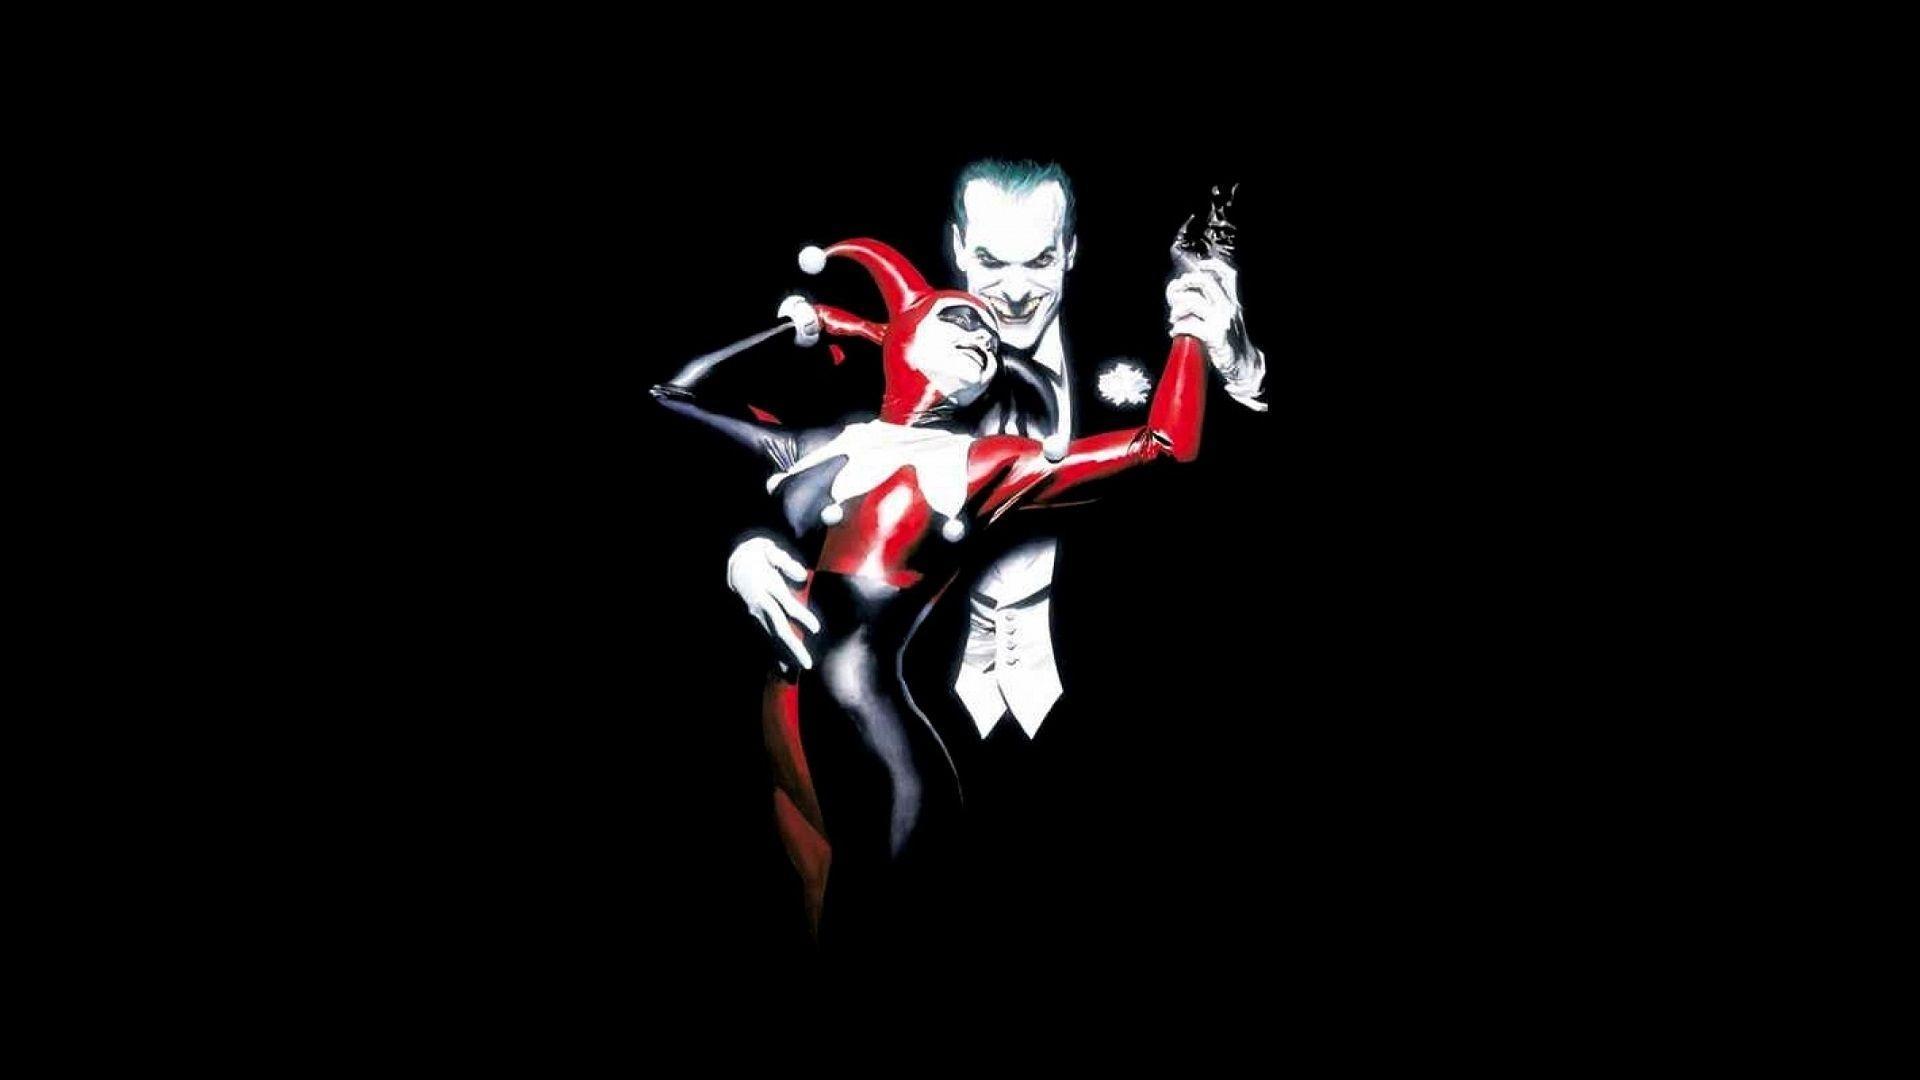 Harley Quinn & Joker Wallpaper